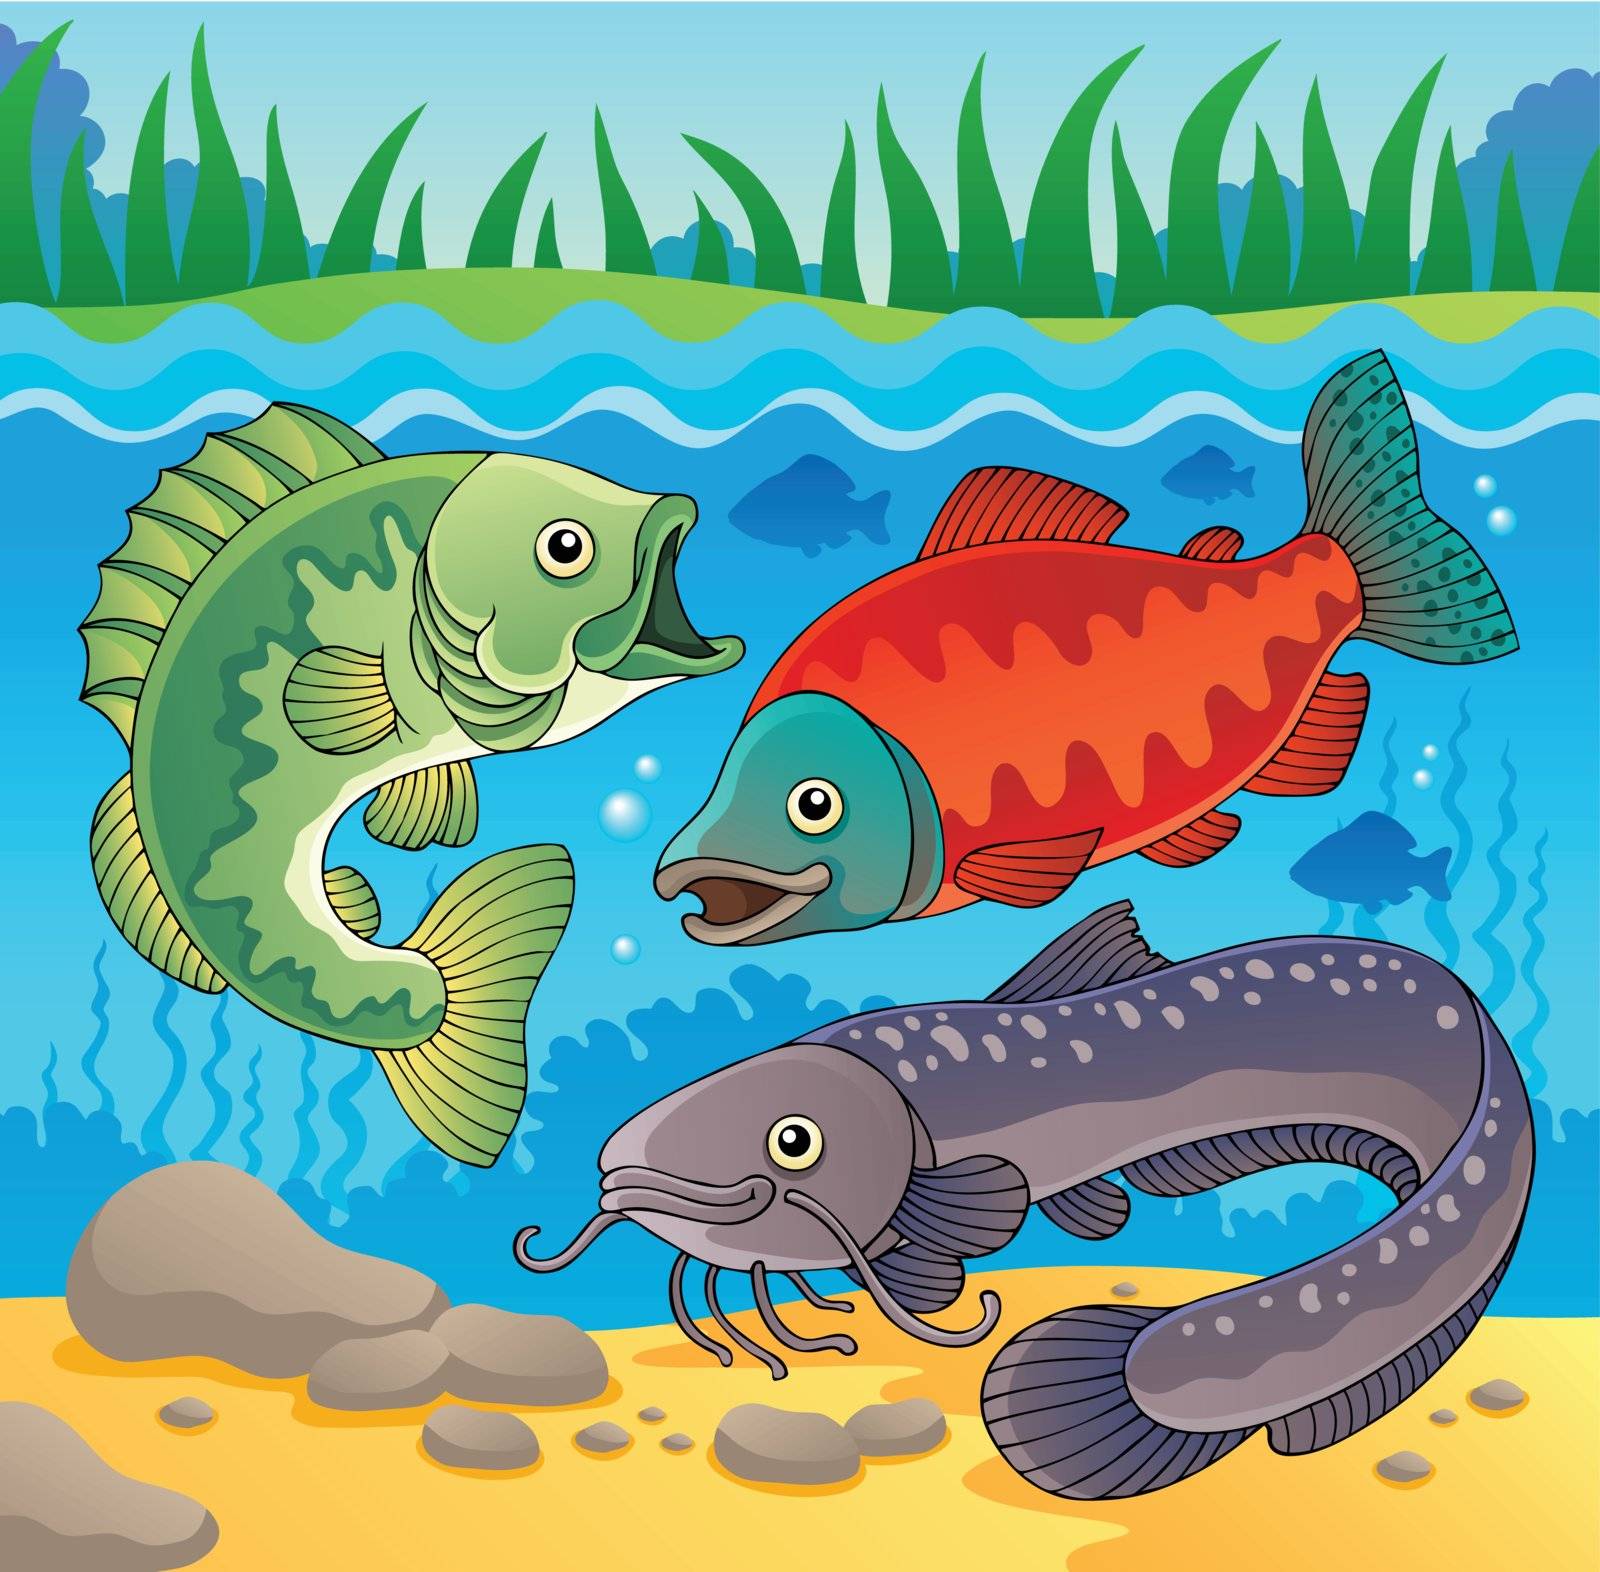 Freshwater fish theme image 3 - vector illustration.